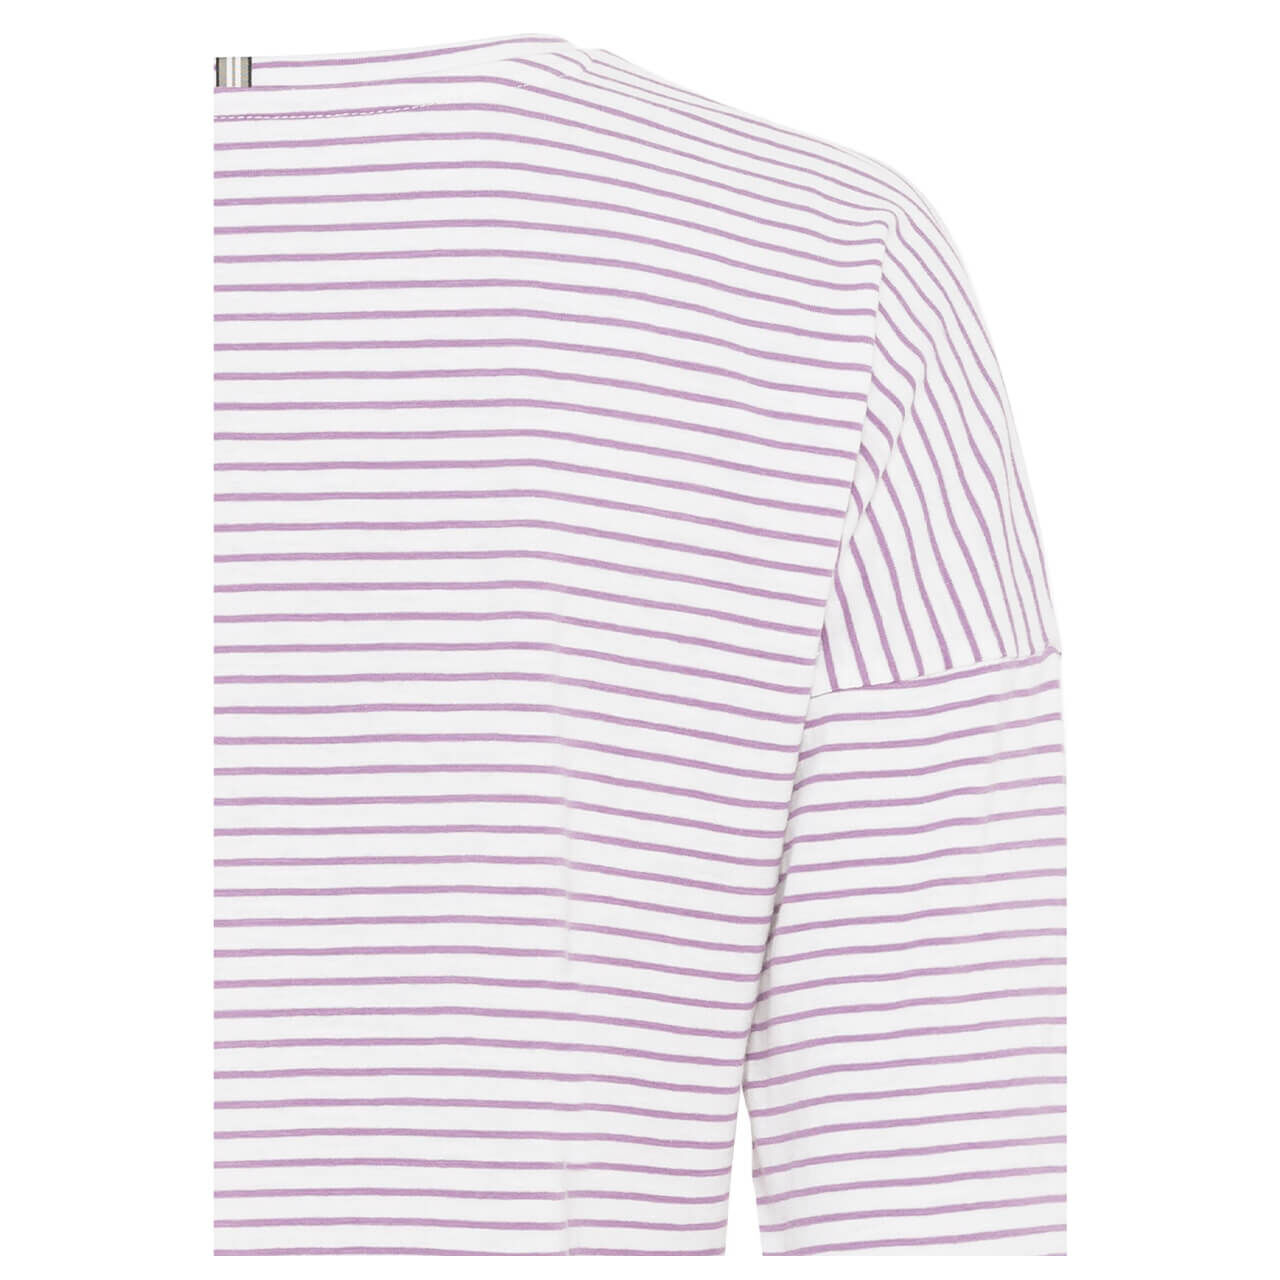 Camel active Damen Langarm Shirt lilac minimal stripes